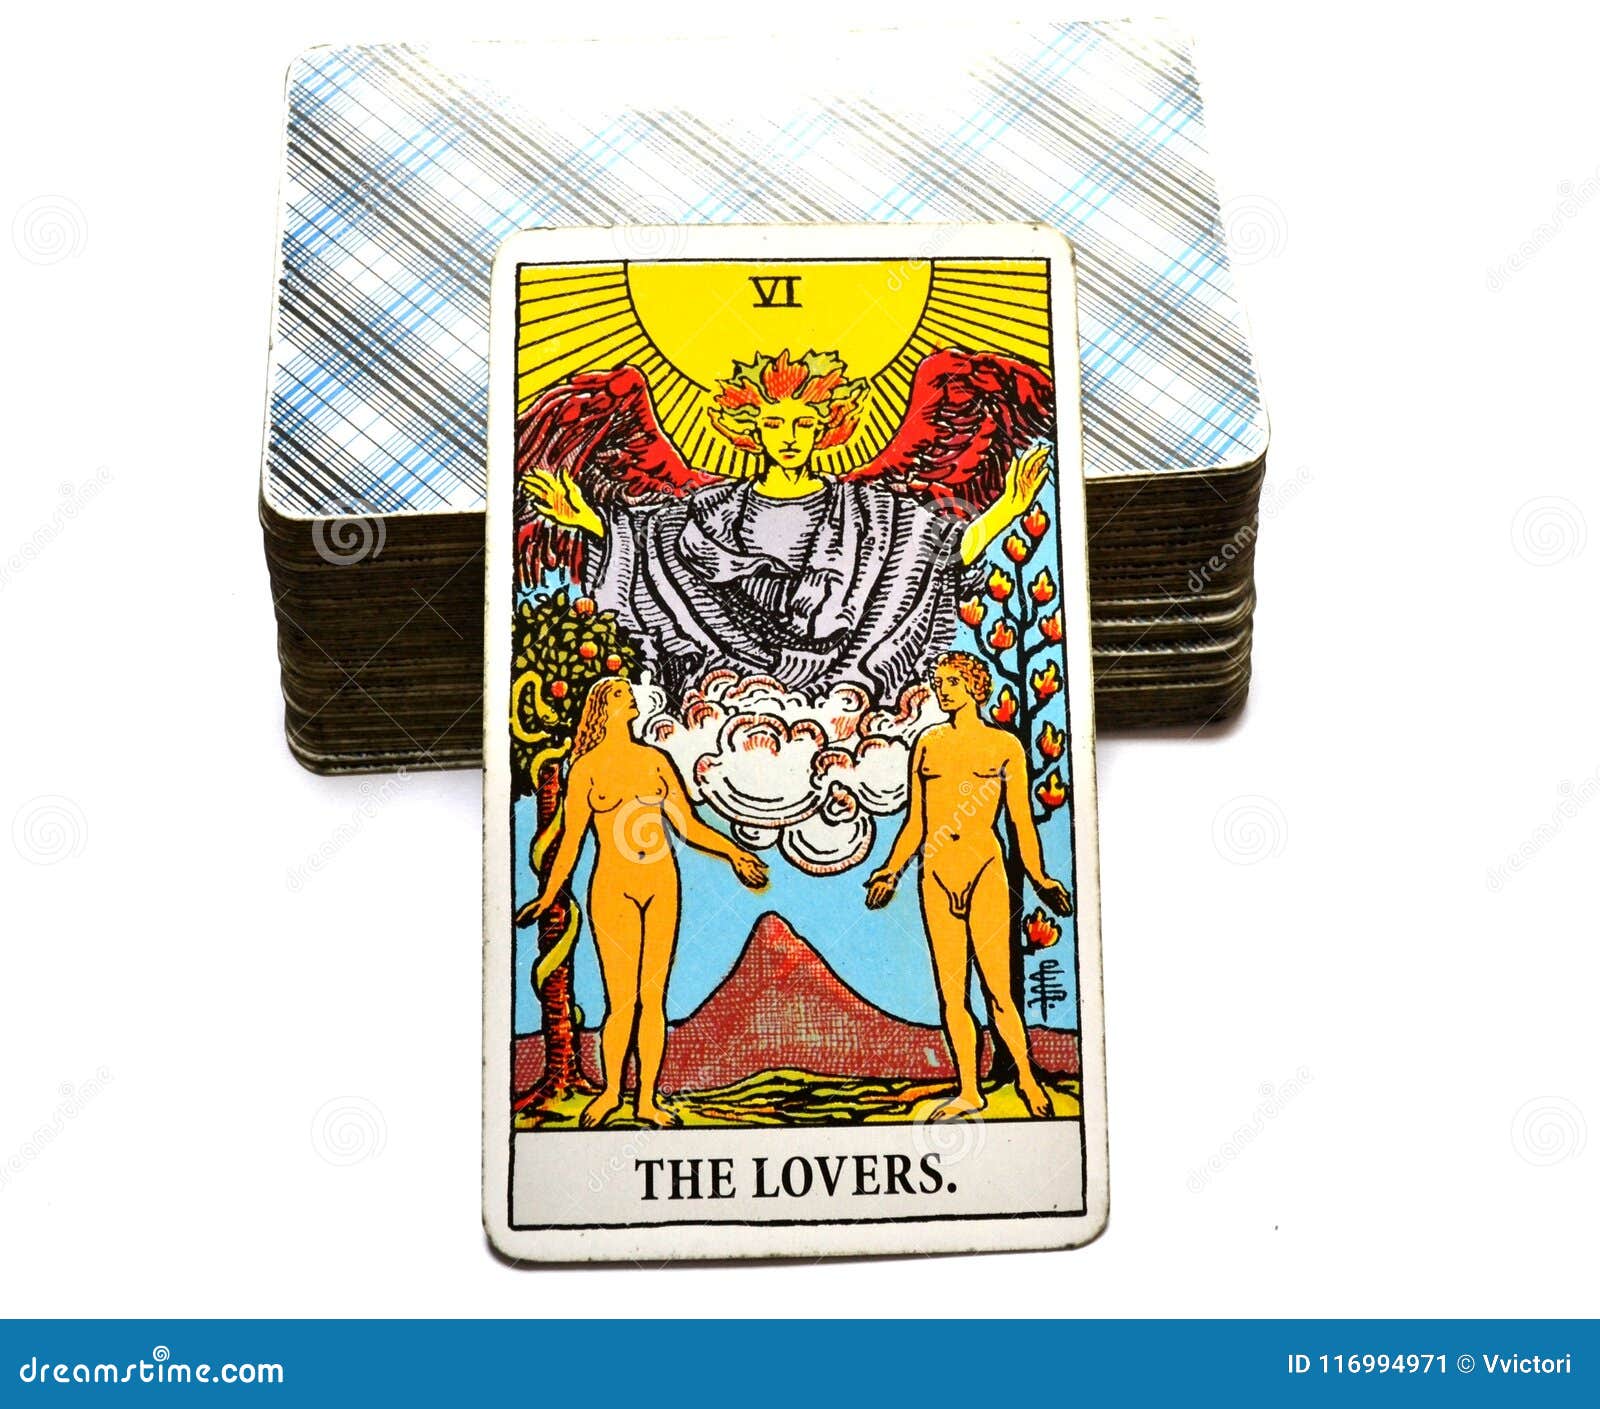 The Lovers VI Tarot Card Art 5x7 Art Print Hand-cut and